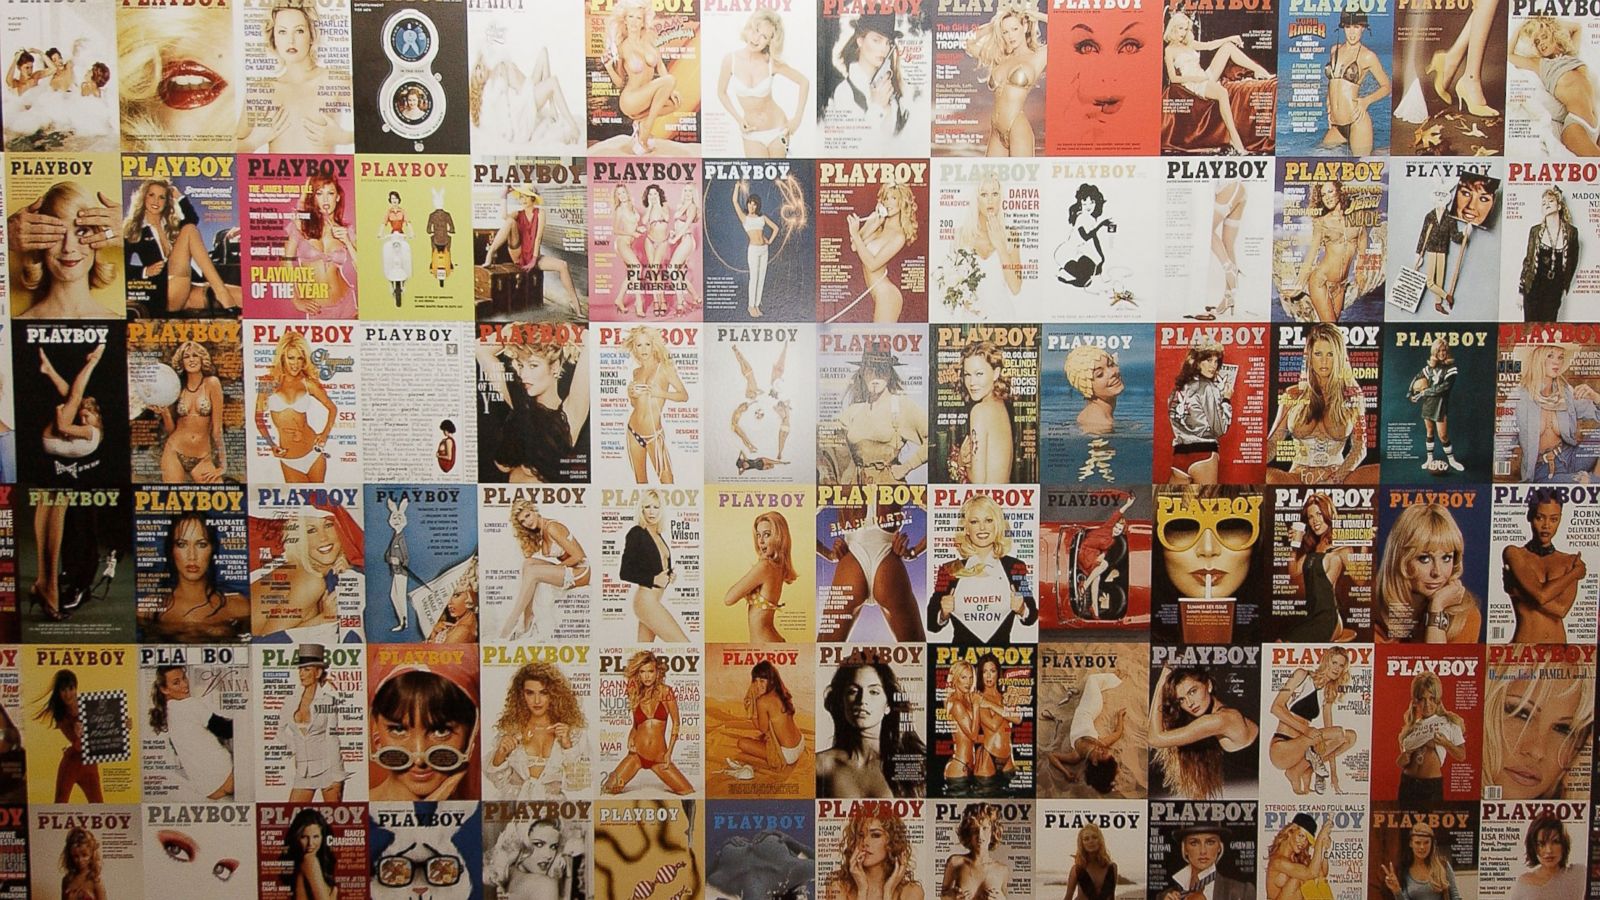 Playboy Magazine Is Getting Rid of Nudity - ABC News